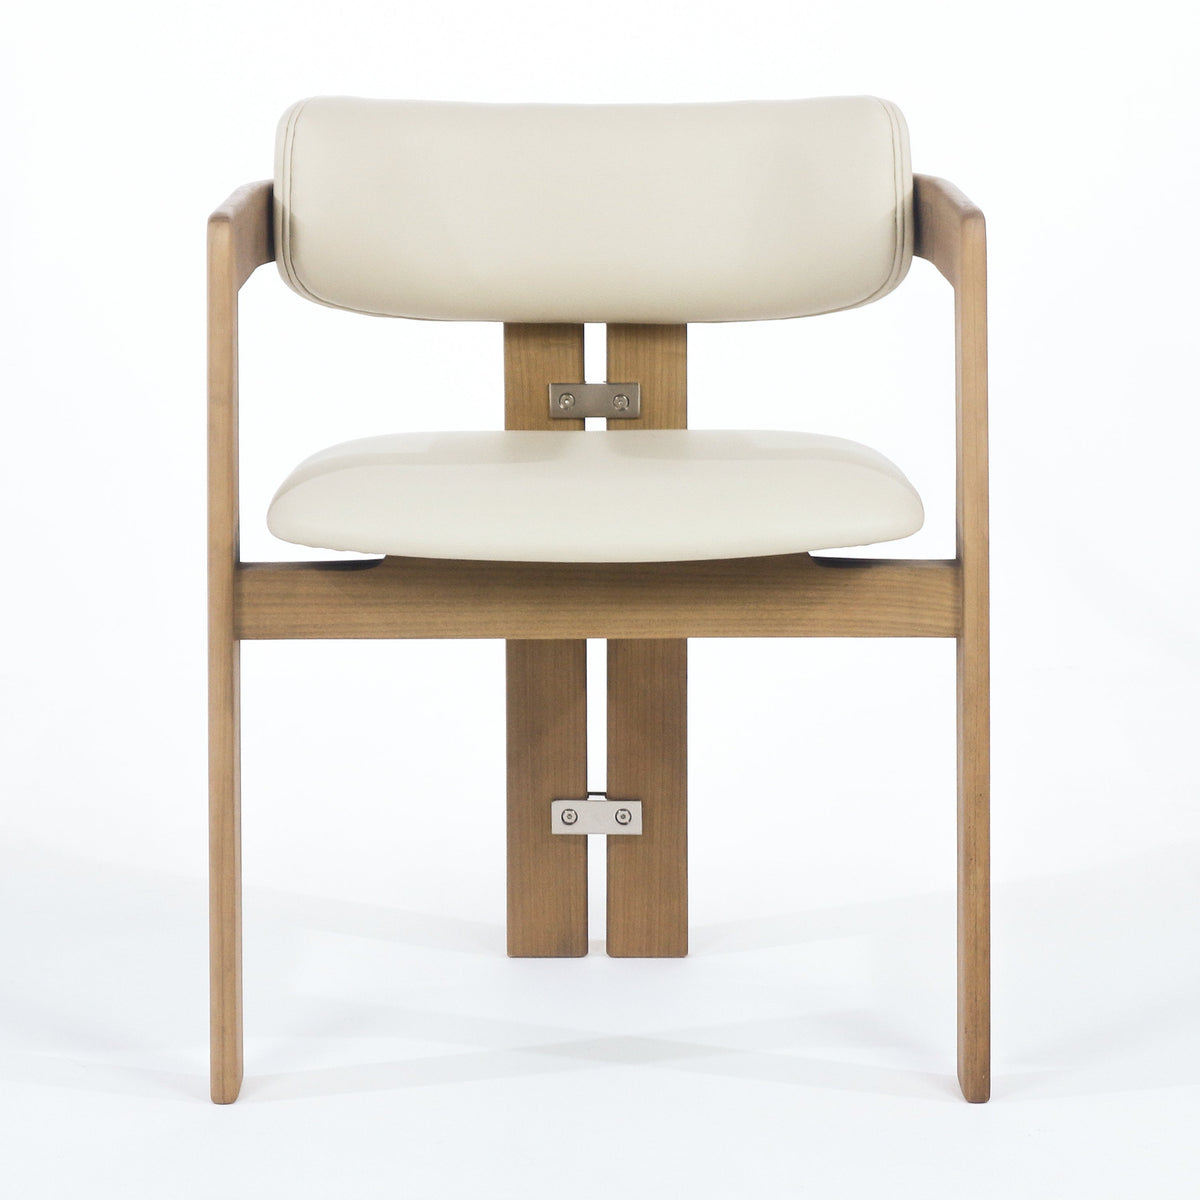 Pamplona Teak &amp; Beige Leather Dining Chair - INTERIORTONIC